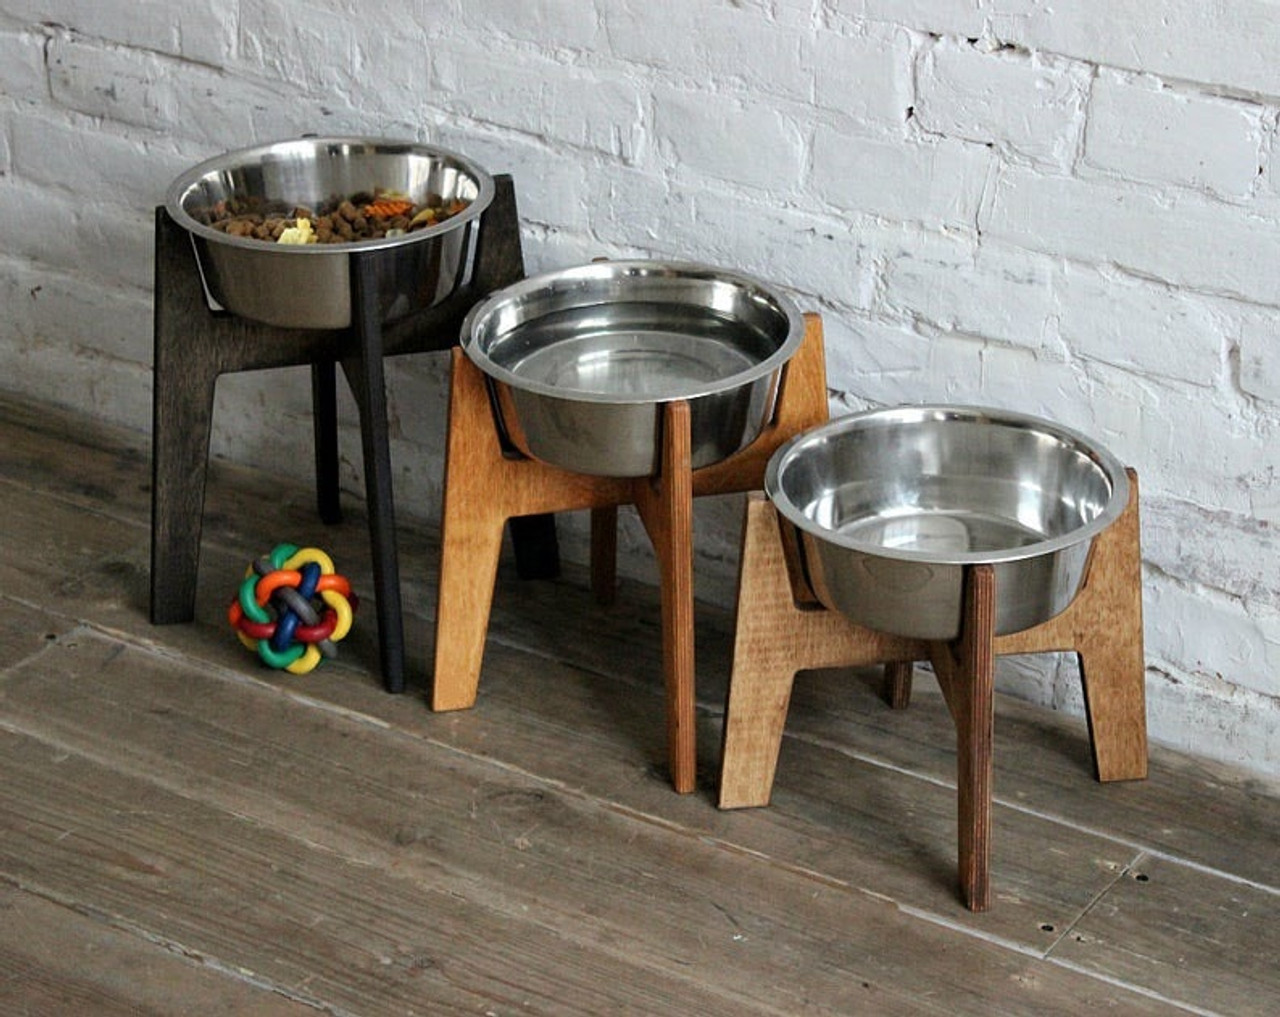  FORDOG Elevated Dog Bowls, Raised Dog Bowls Stand